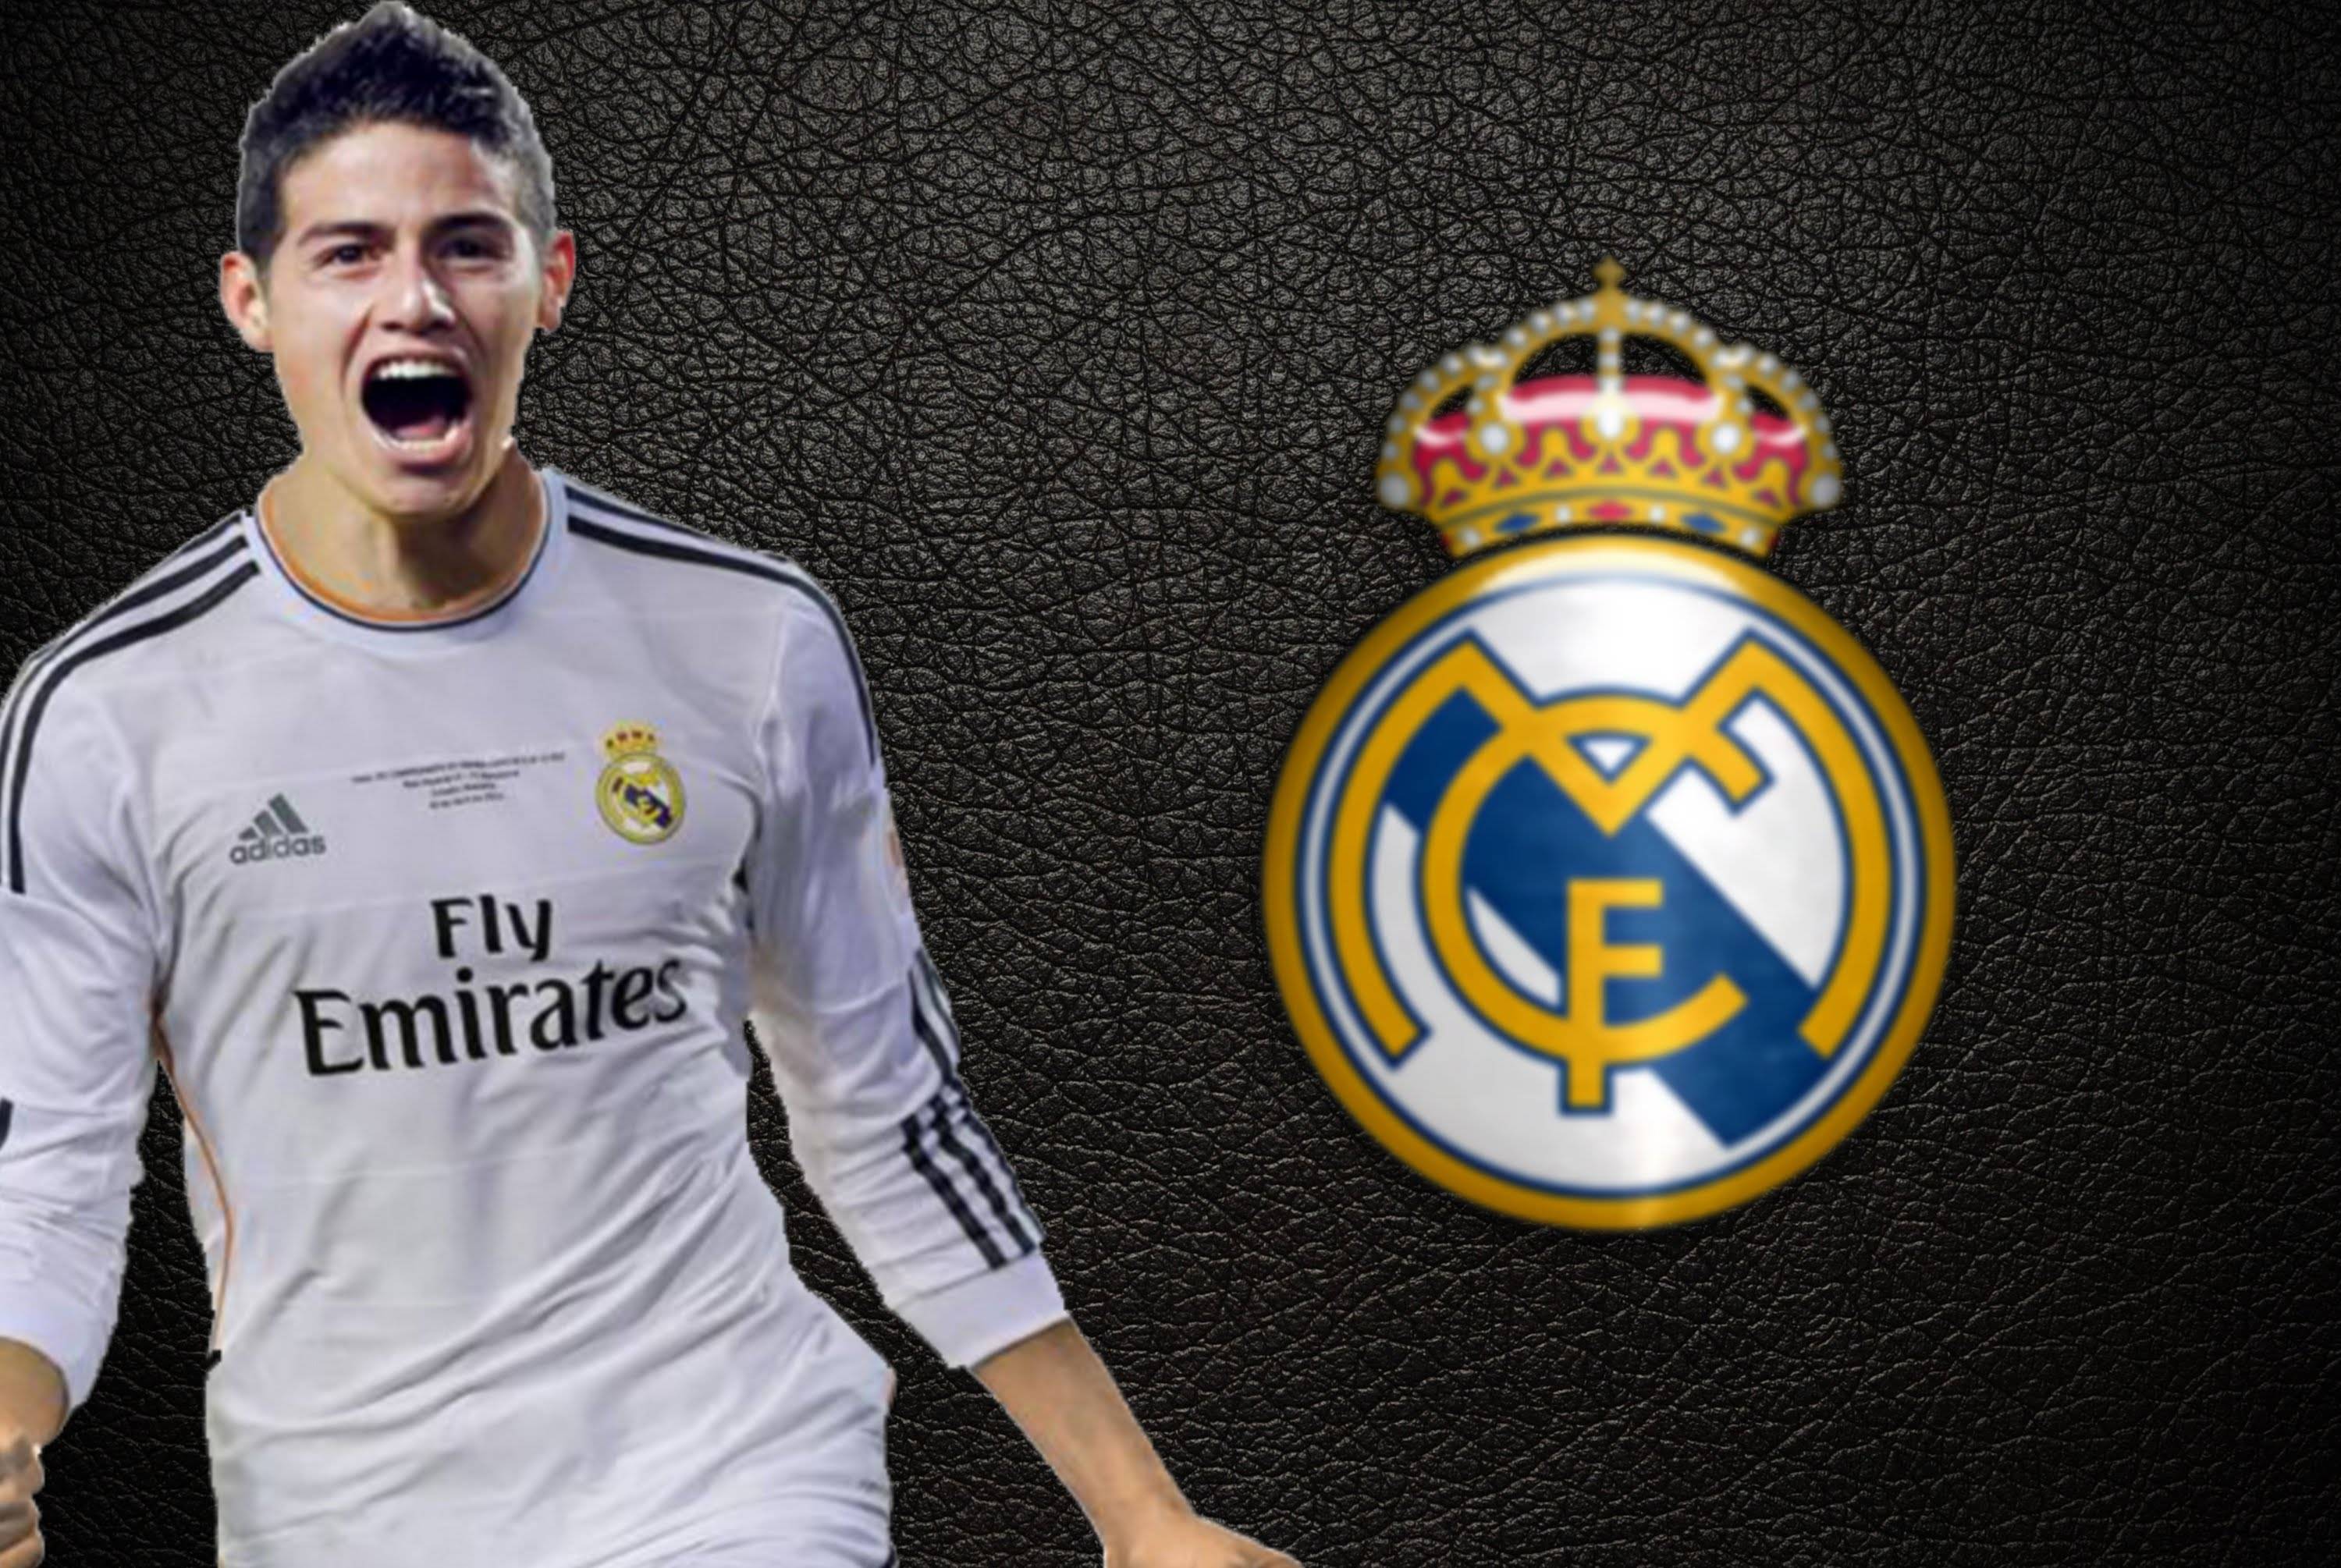 Real Madrid 2015 Wallpaper 3D